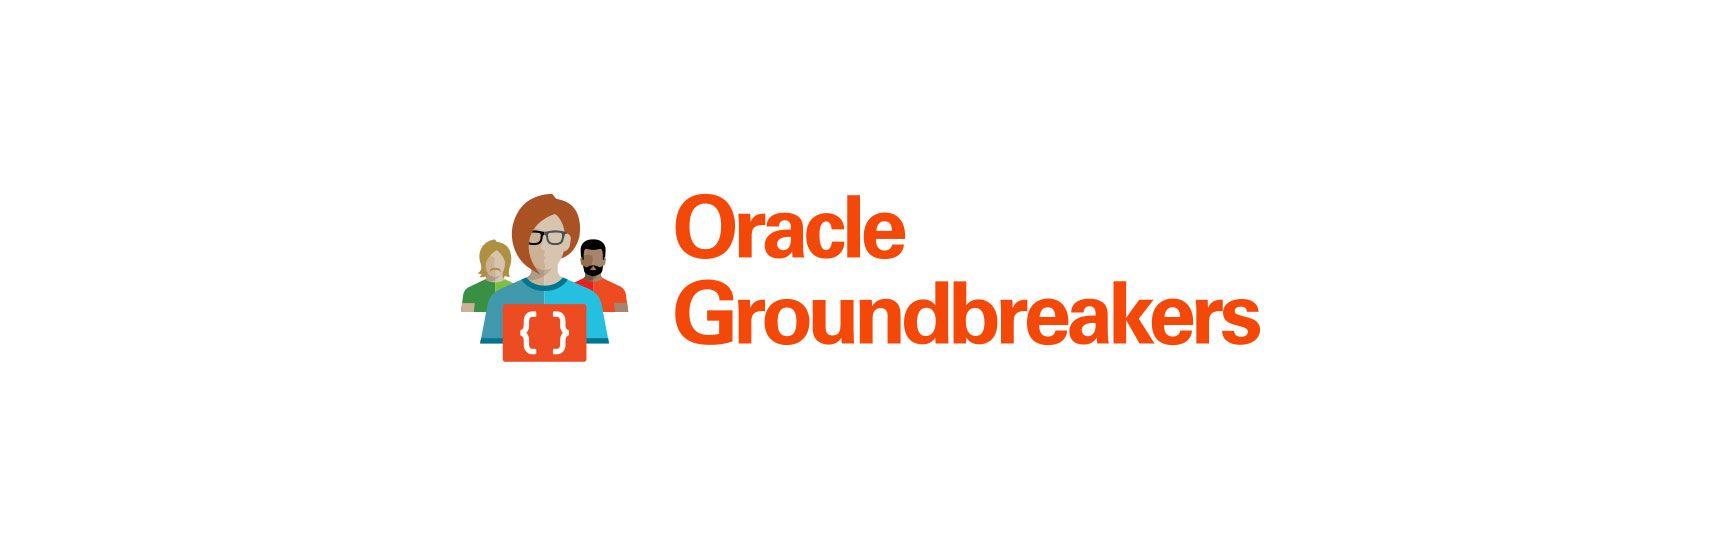 Oracle O Logo - Oracle Brand | Logos